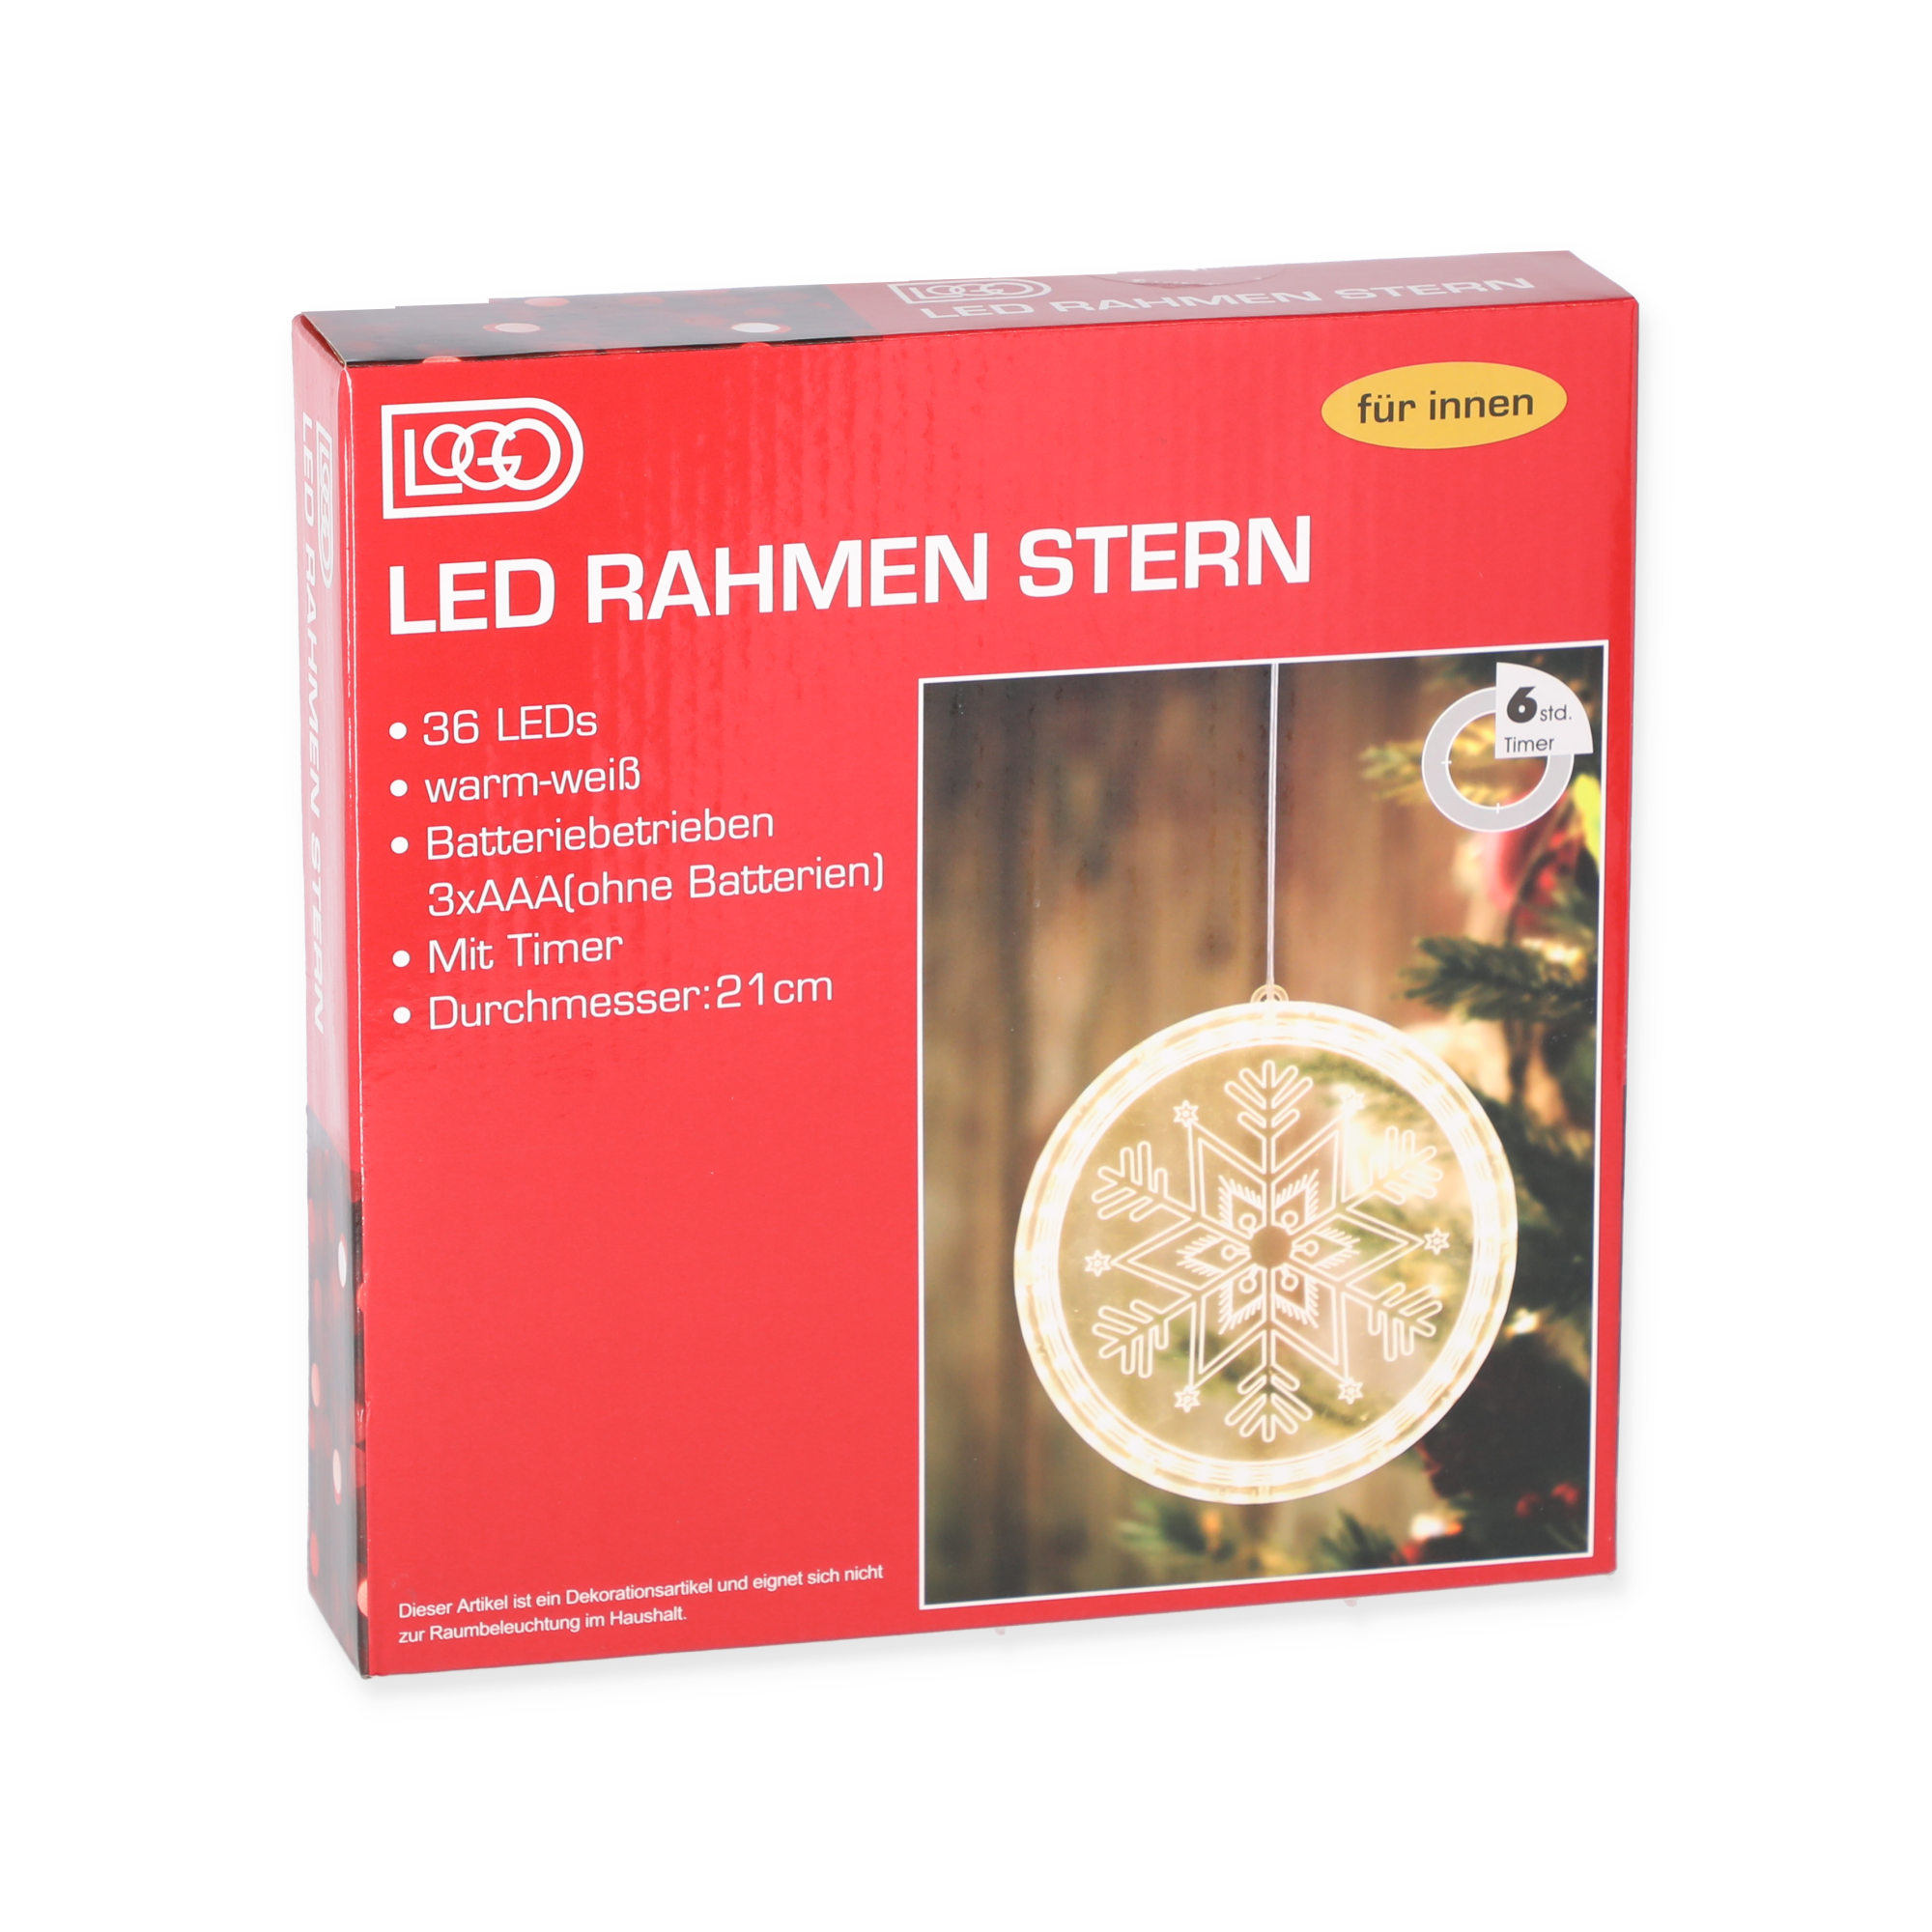 LED-Fensterbild 'Stern' 36 LEDs warmweiß Ø 21 cm + product picture